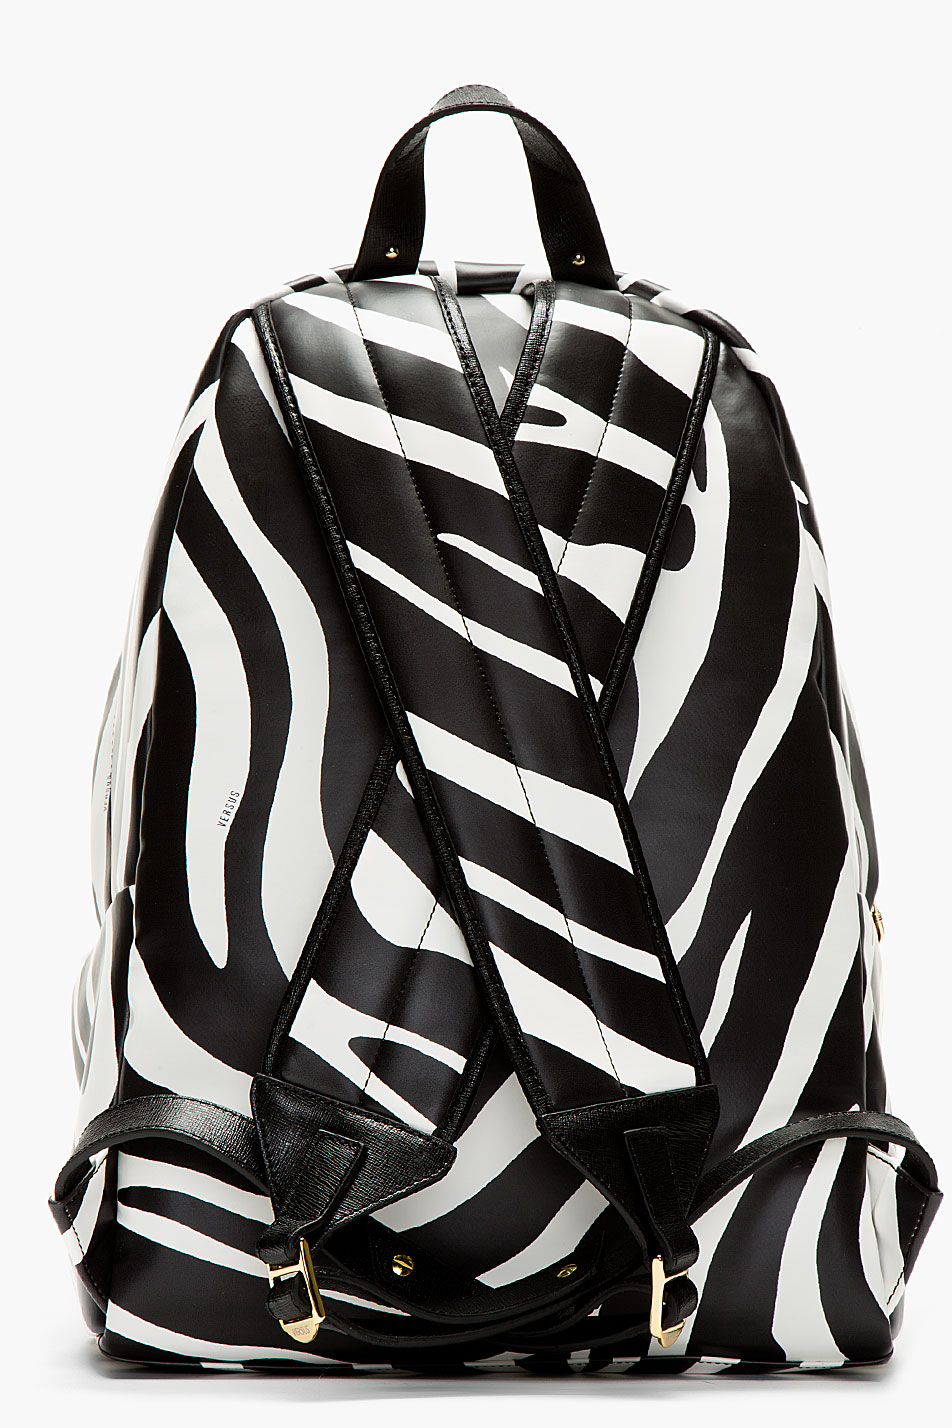 Zebra print Versus backpack 2